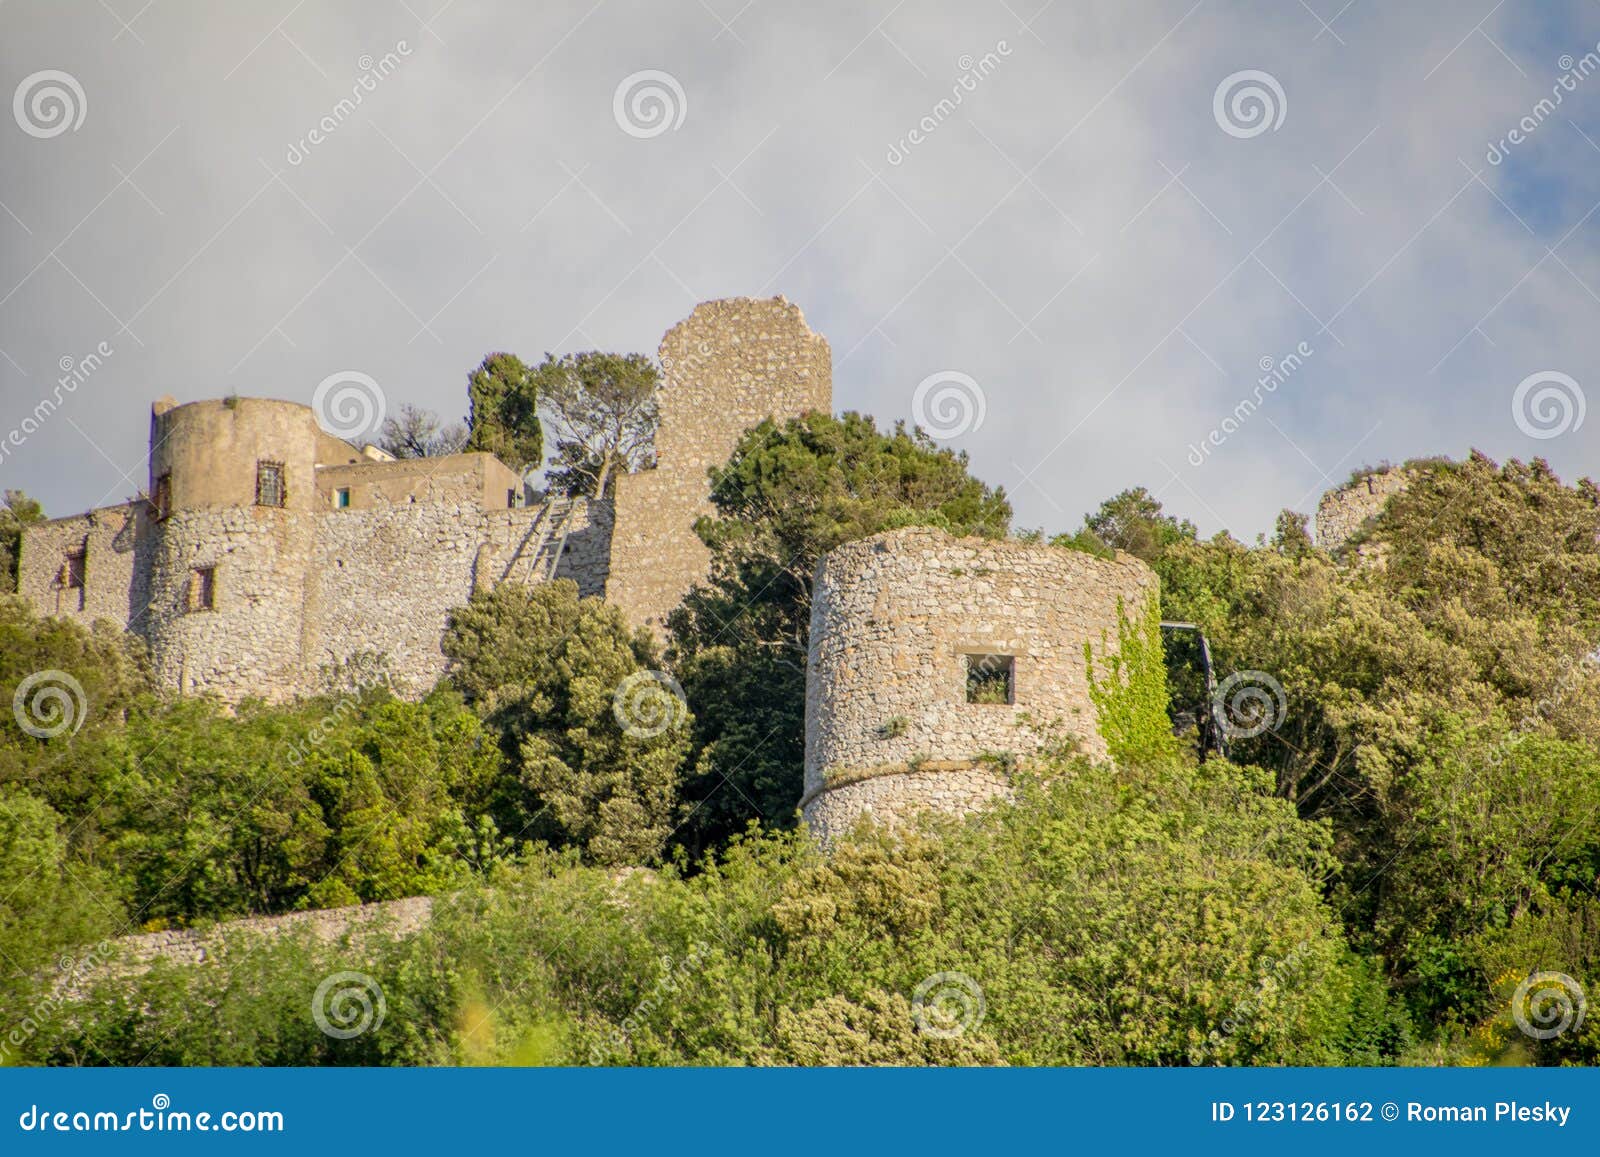 castello barbarossa on the island of capri, italy